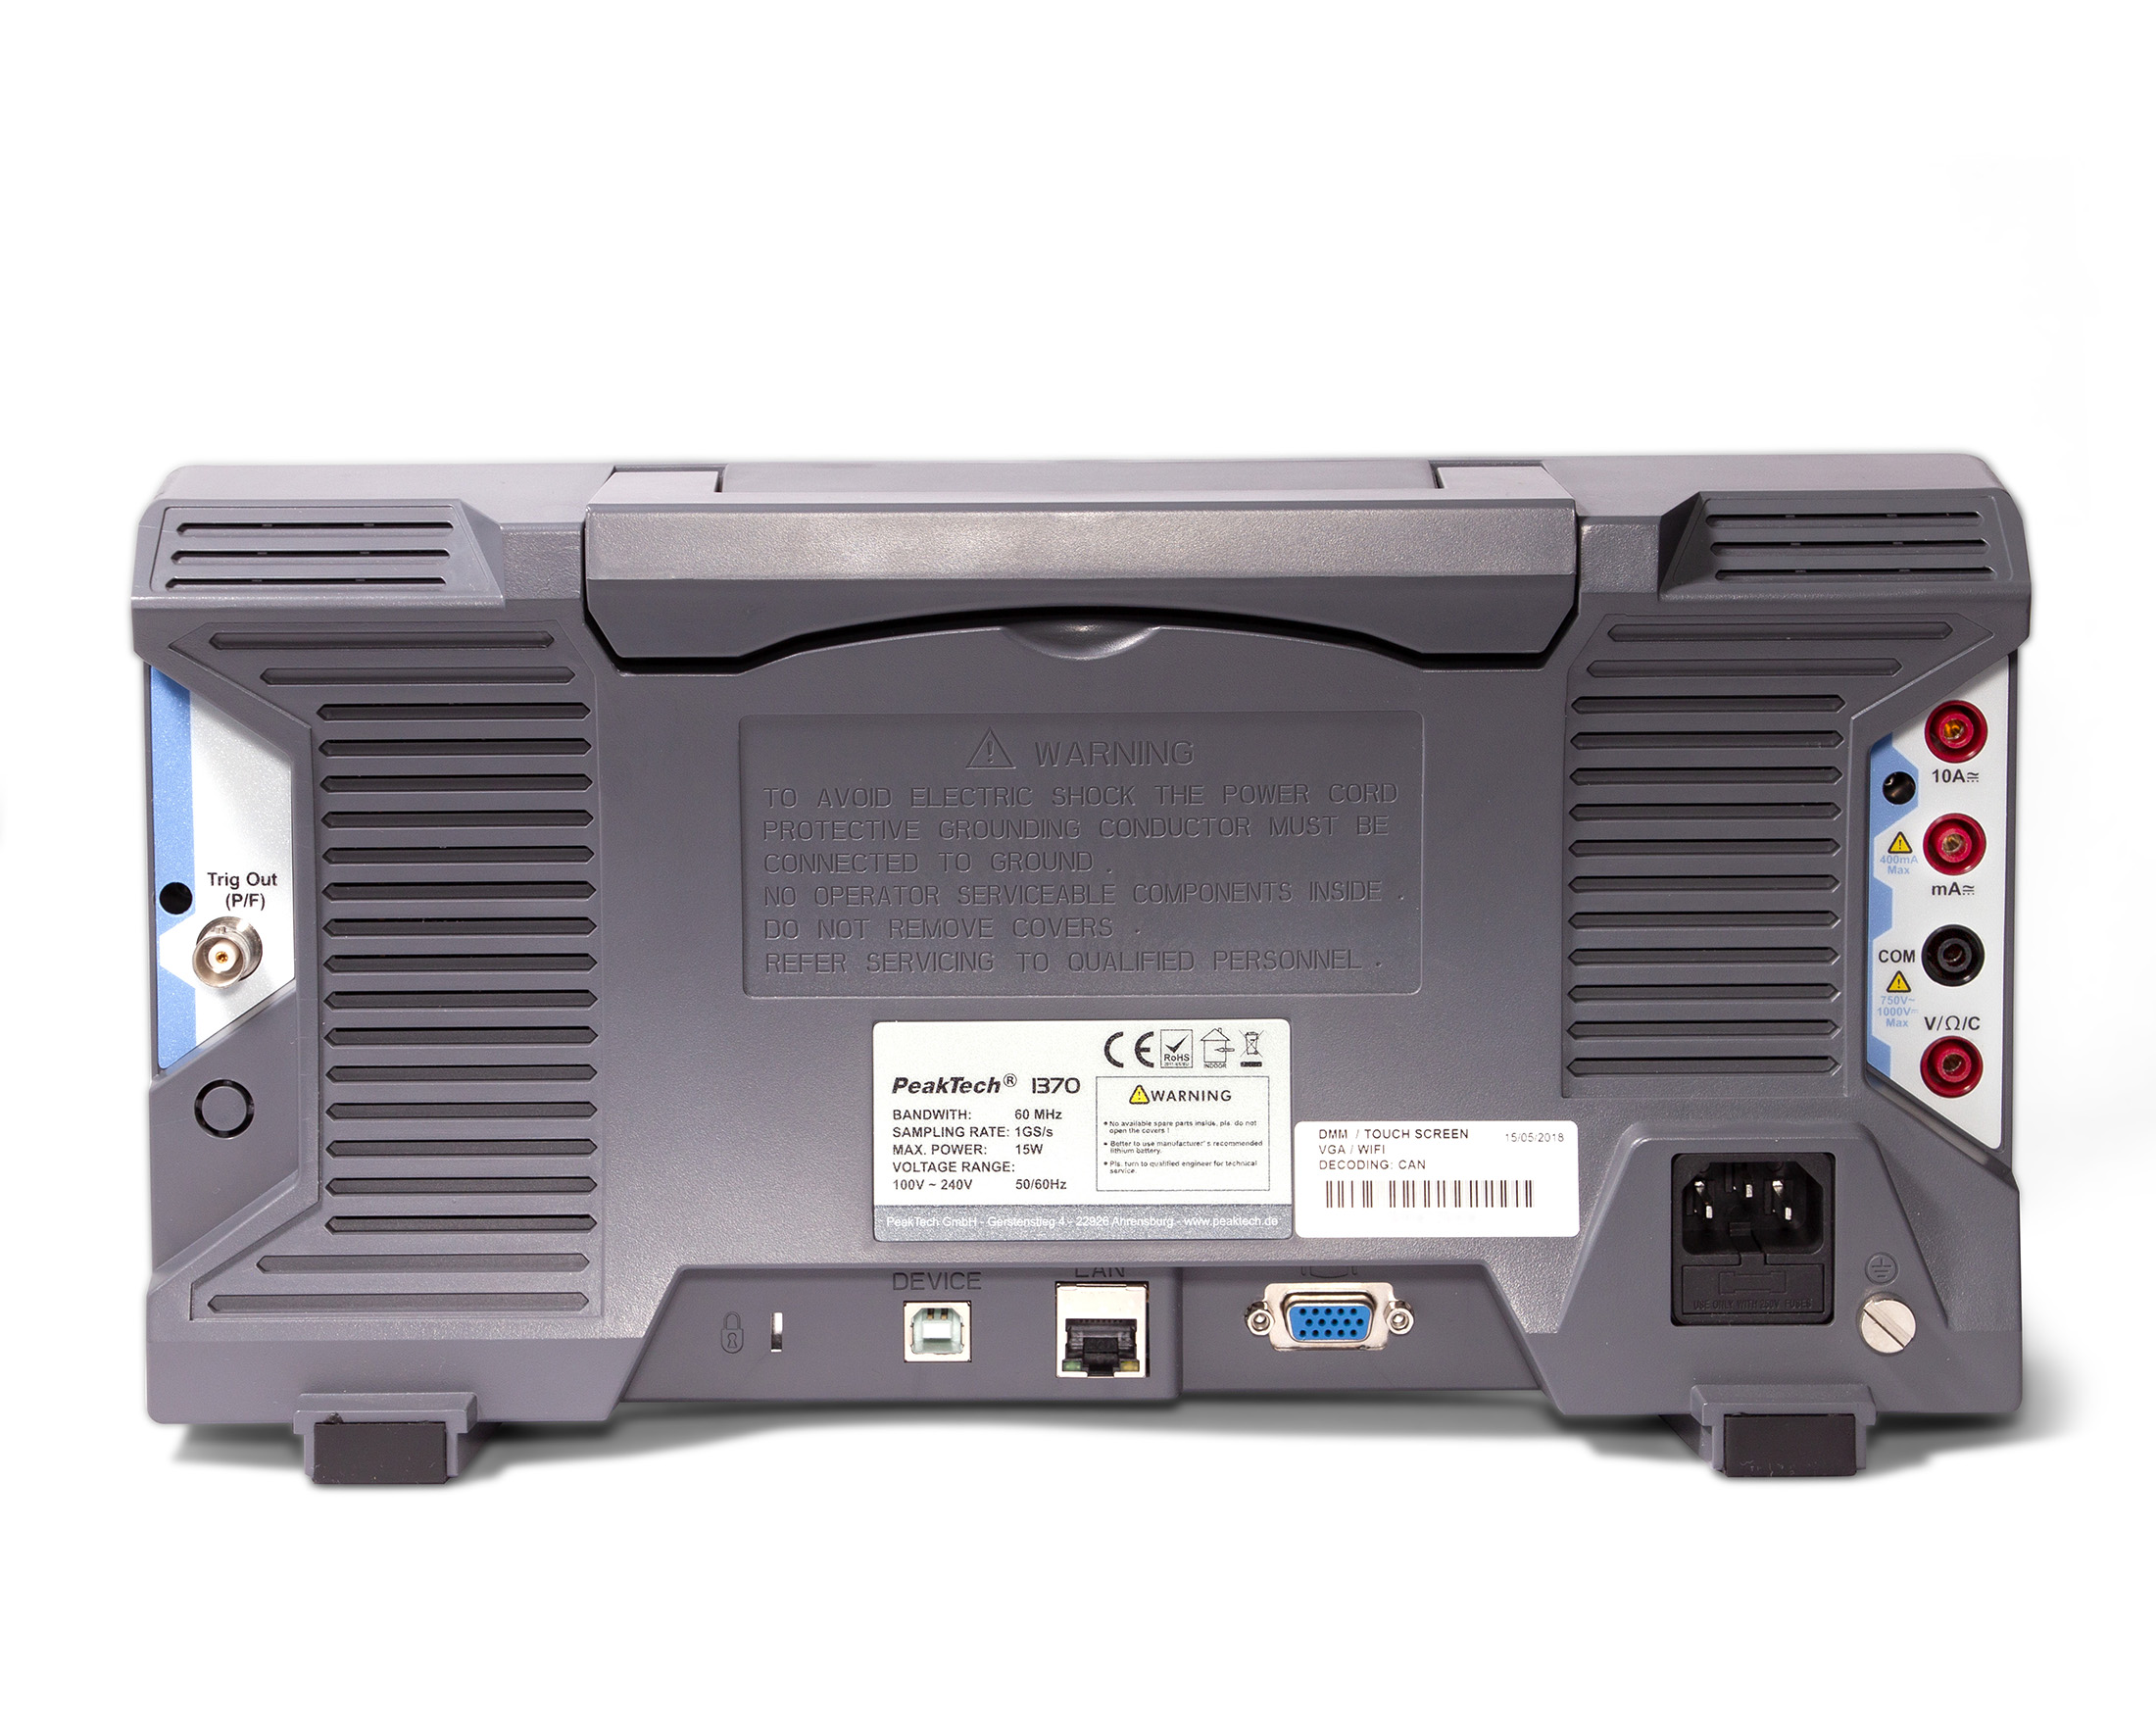 «PeakTech® P 1370» 60 MHz / 4 CH, 1 GS/s touchscreen oscilloscope